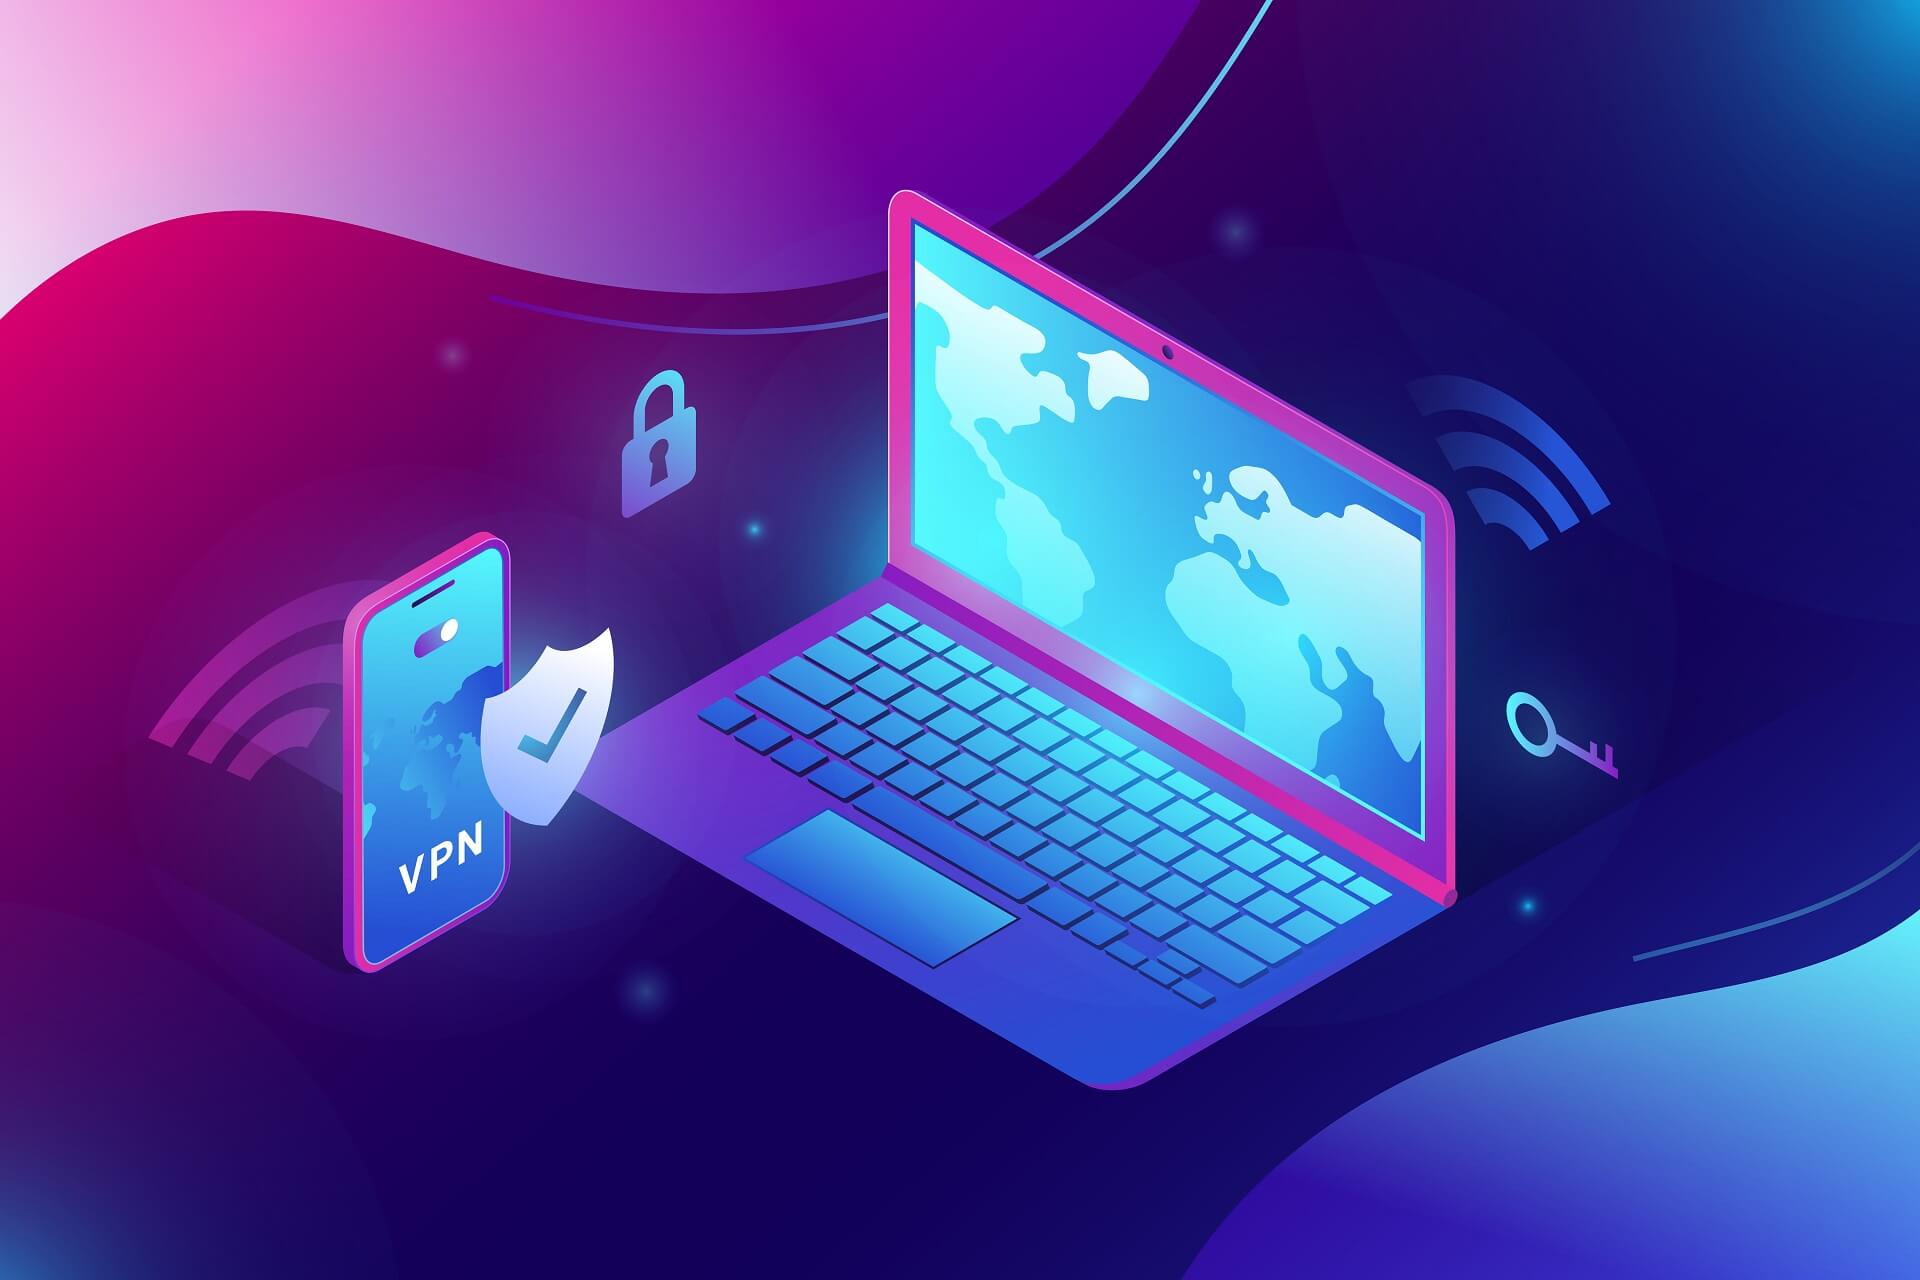 VPN for edge browser